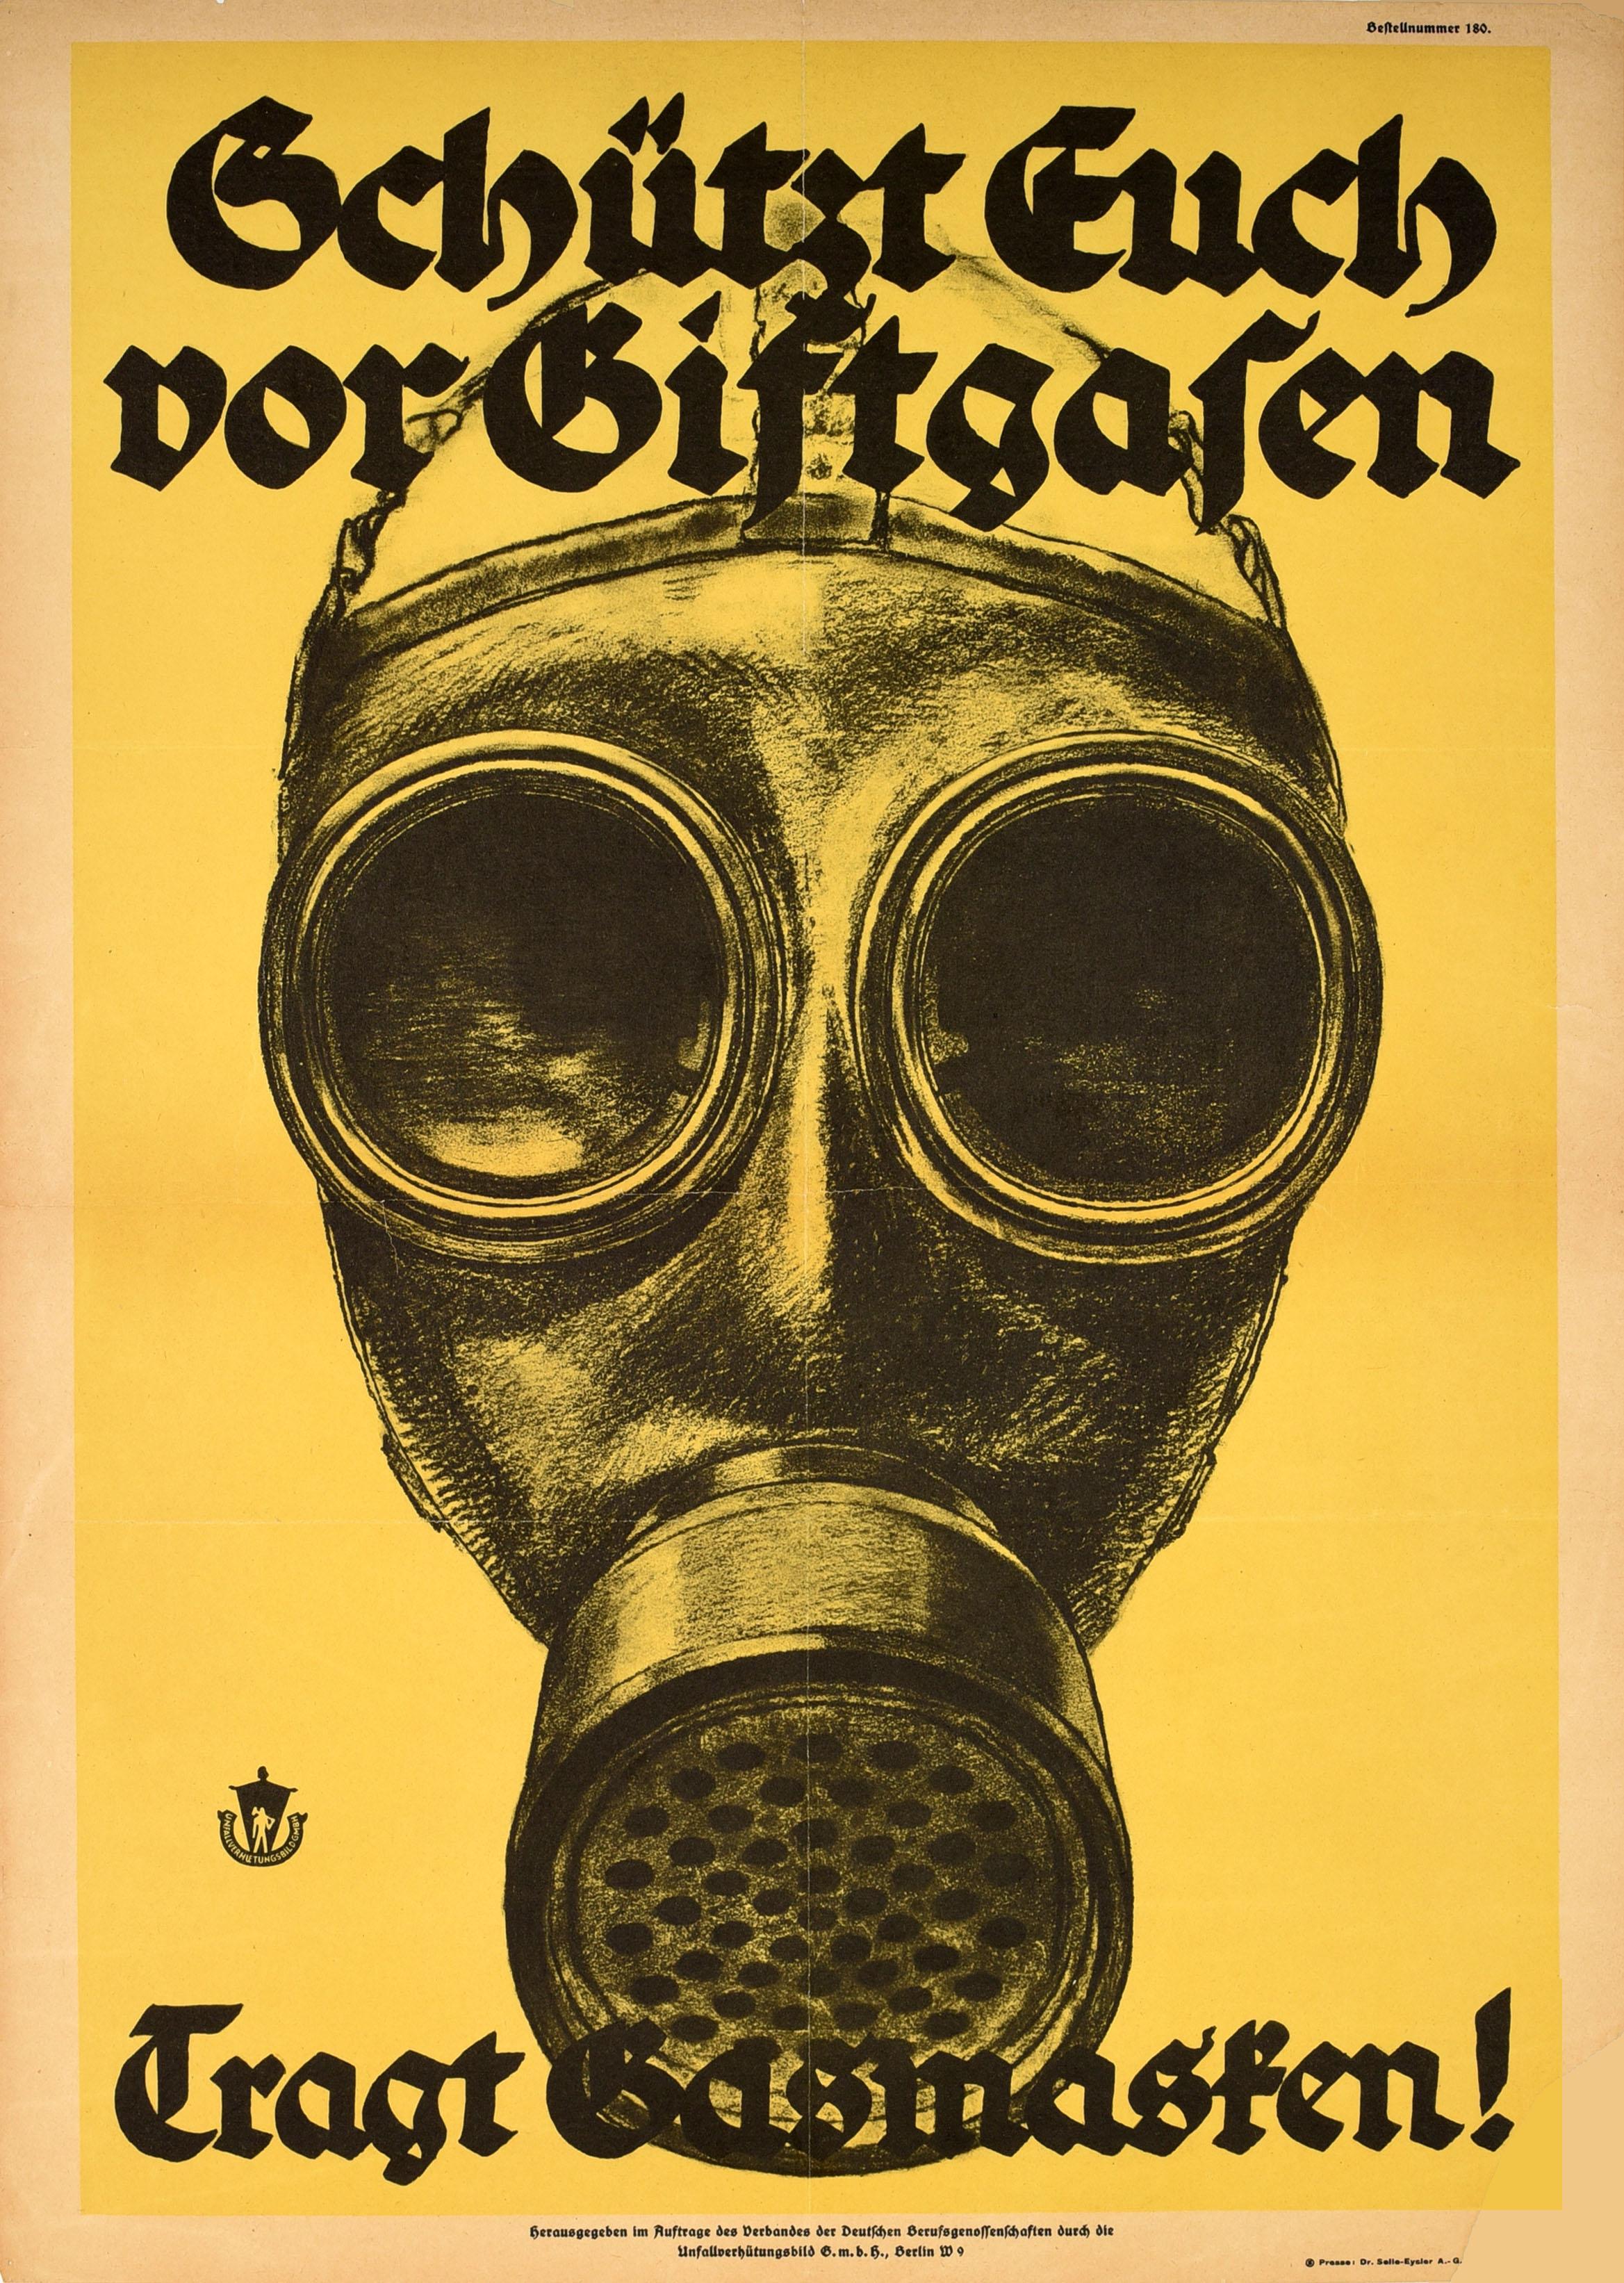 Unknown Print - Original Antique WWI Poster Wear Gas Mask Poison Gases Giftgasen Tragt Gasmasken